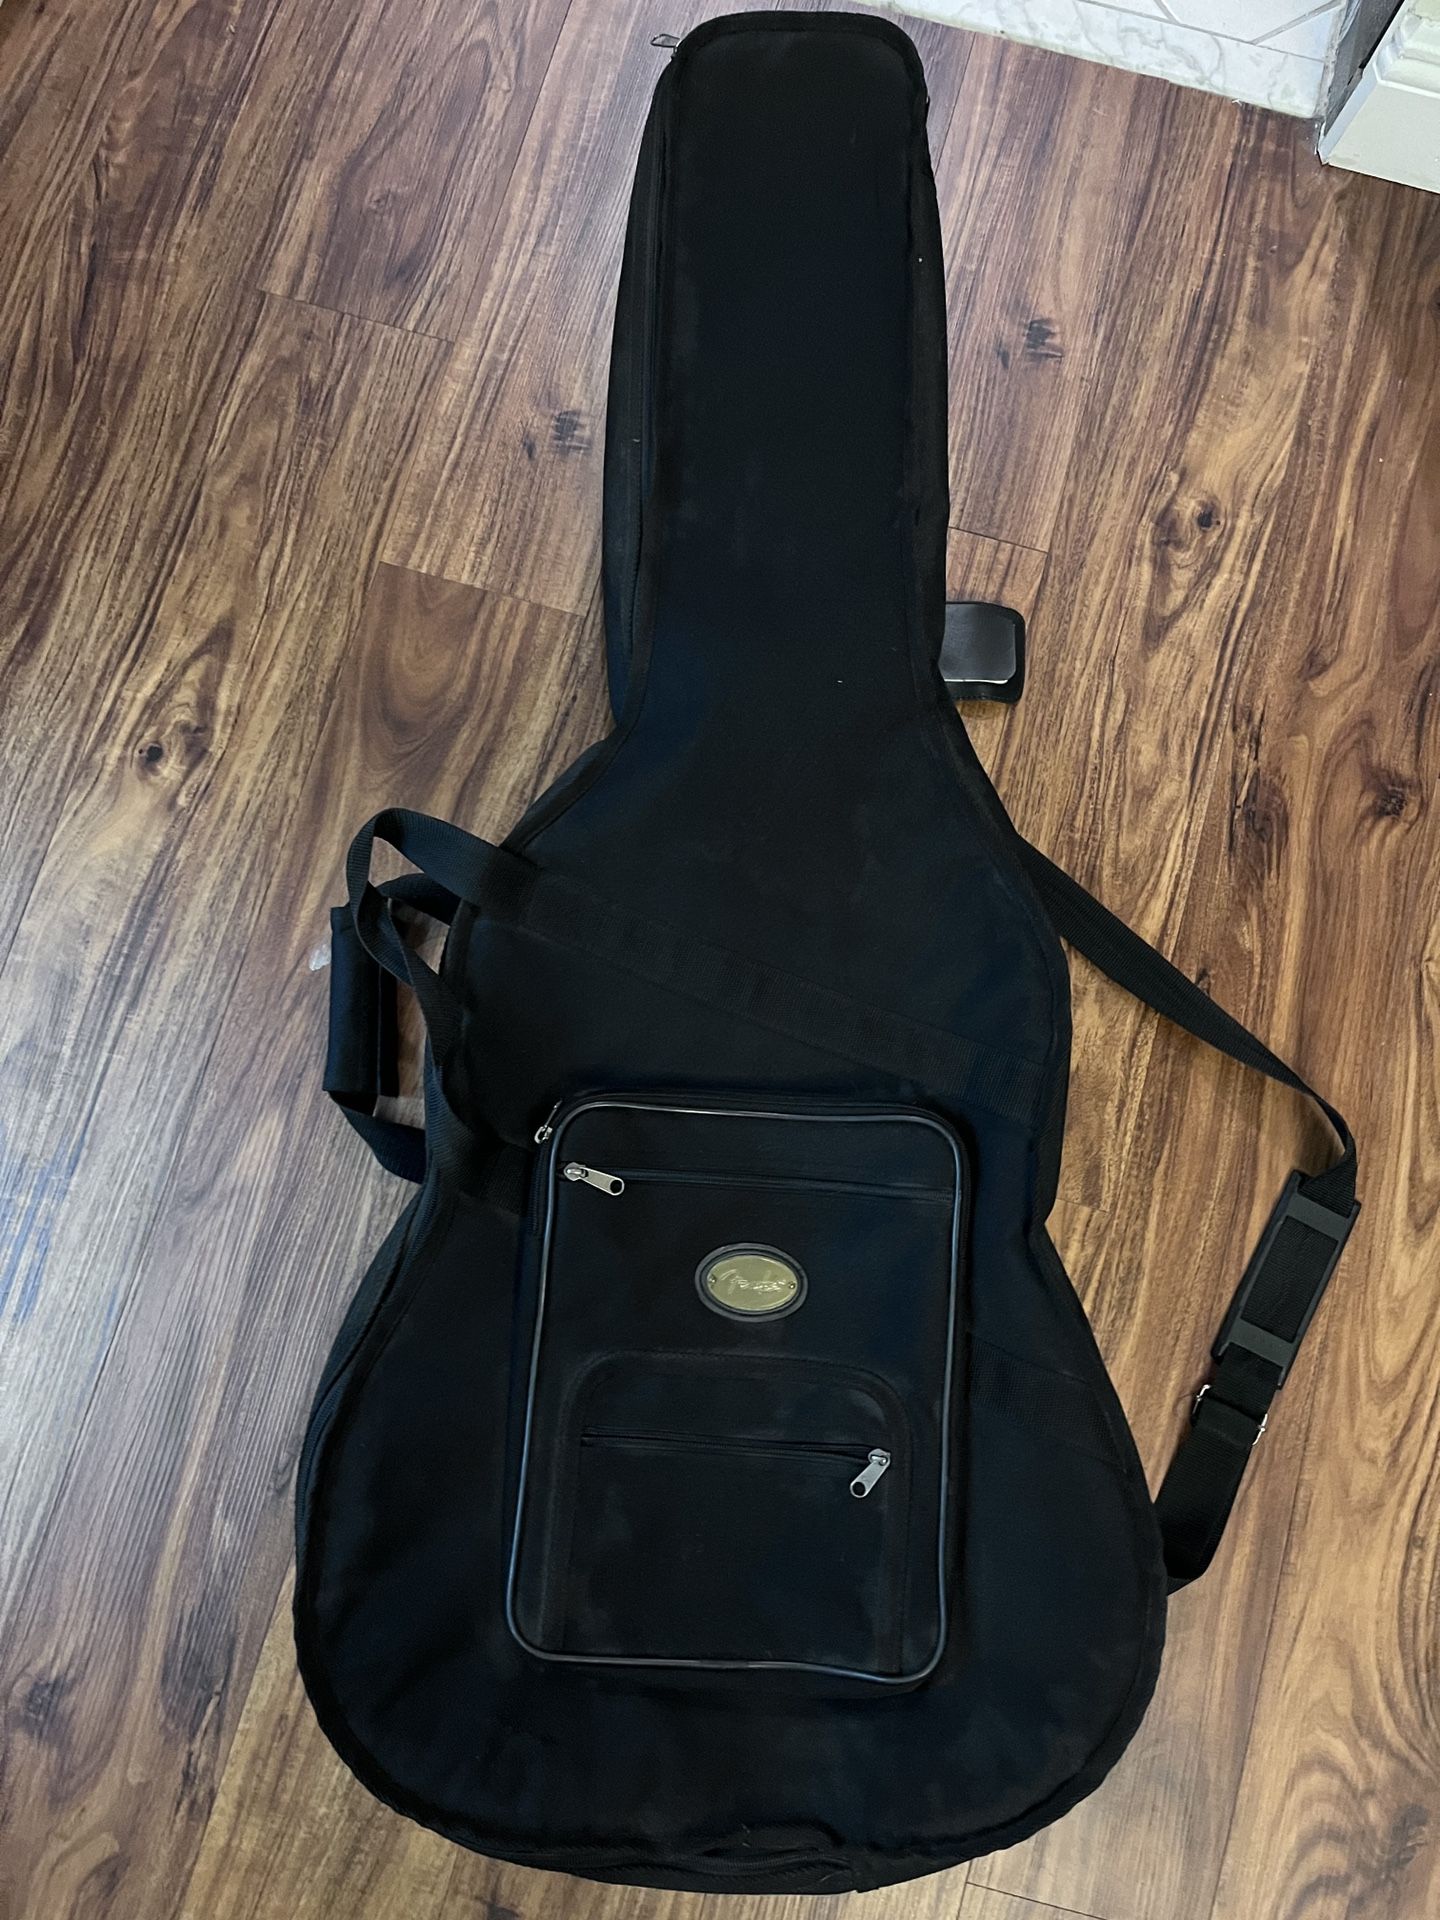 Fender acoustic guitar, big bag